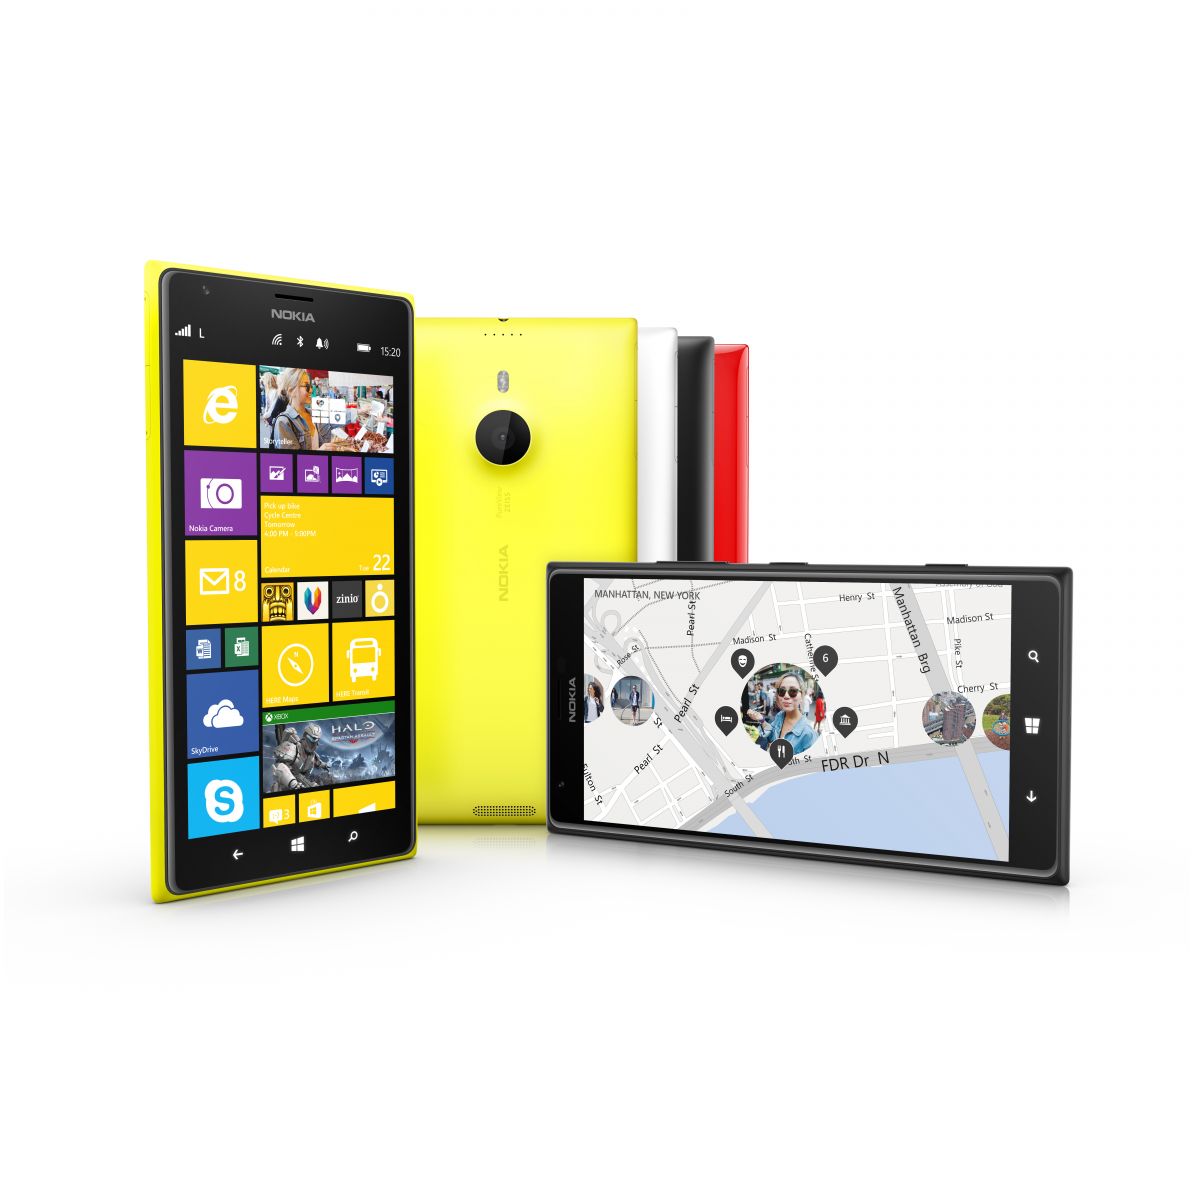 Lumia 1520 partage